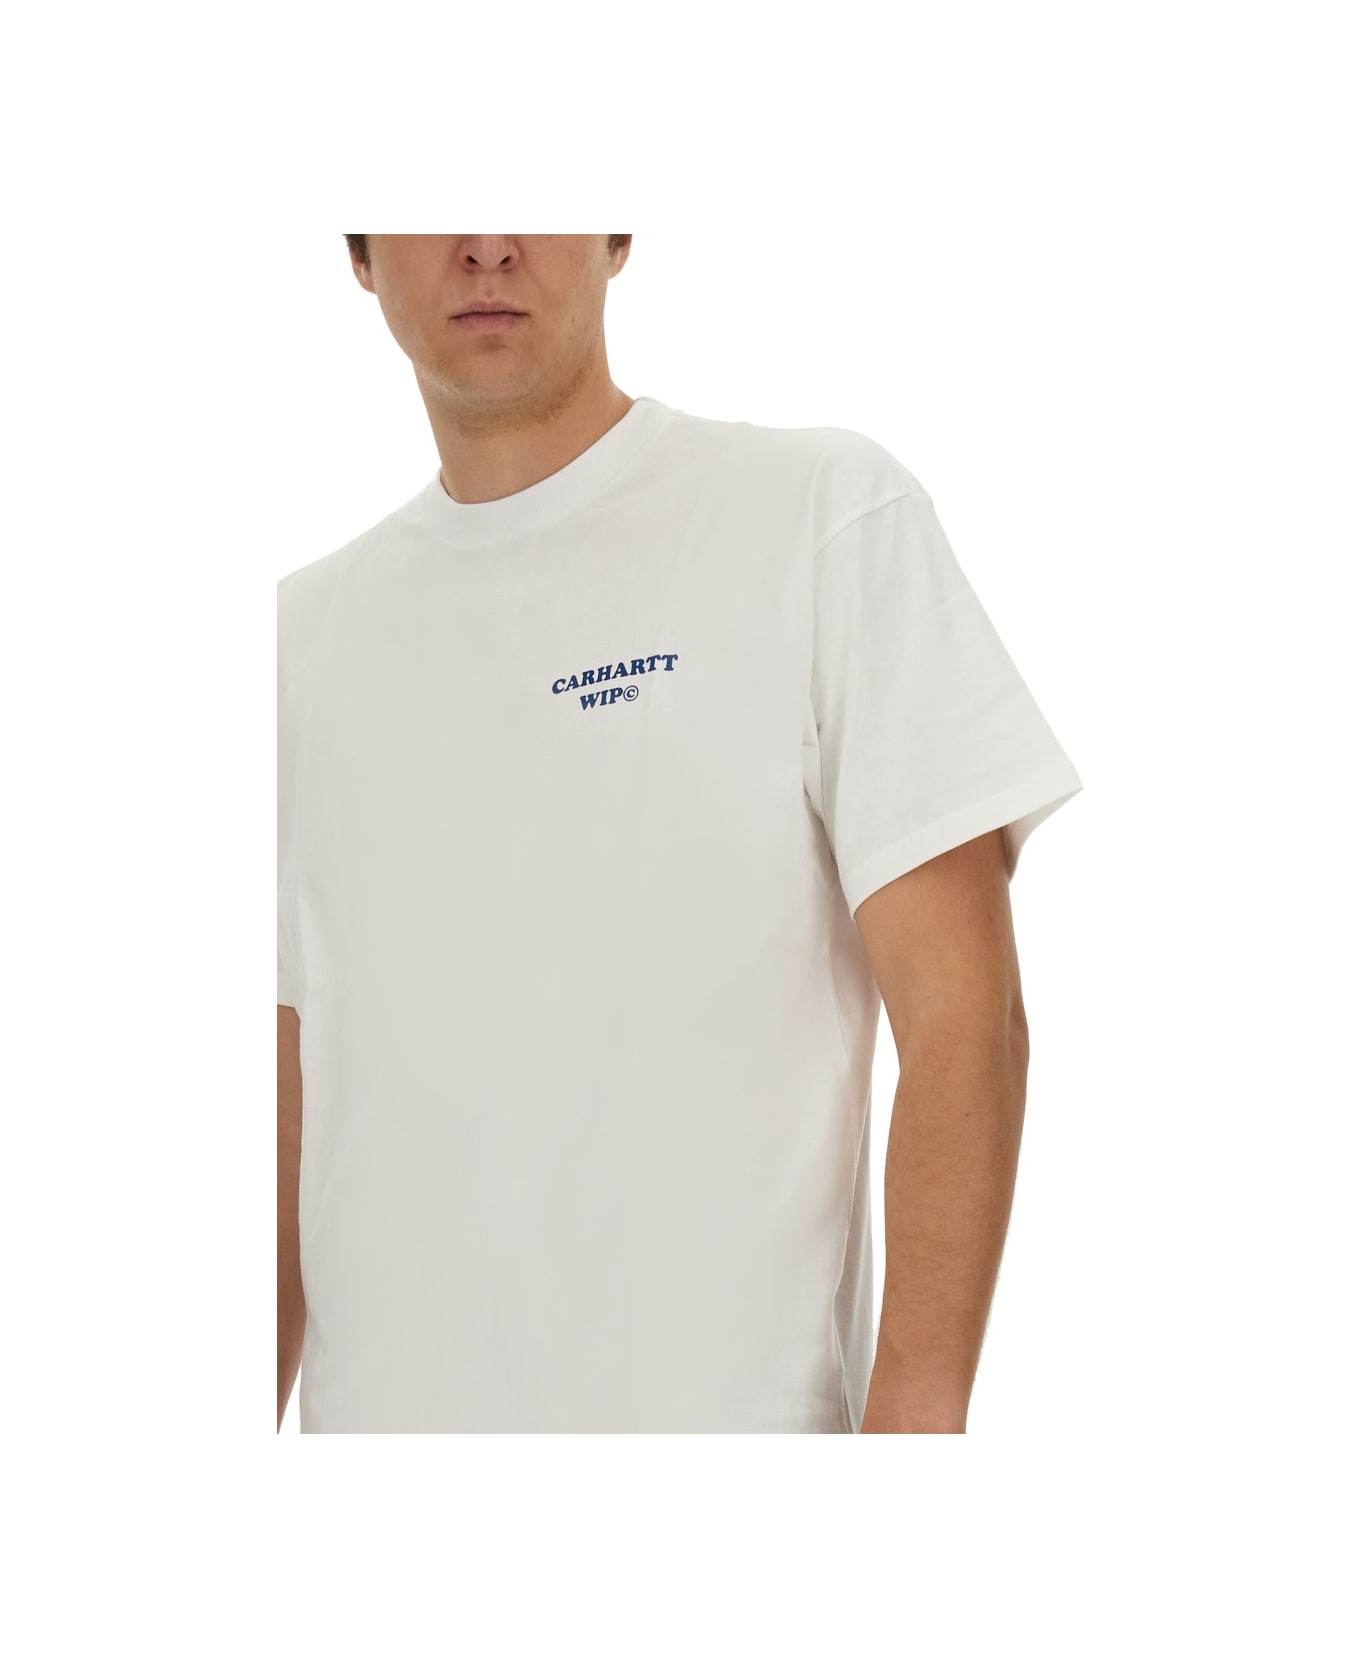 Carhartt T-shirt With Logo - WHITE